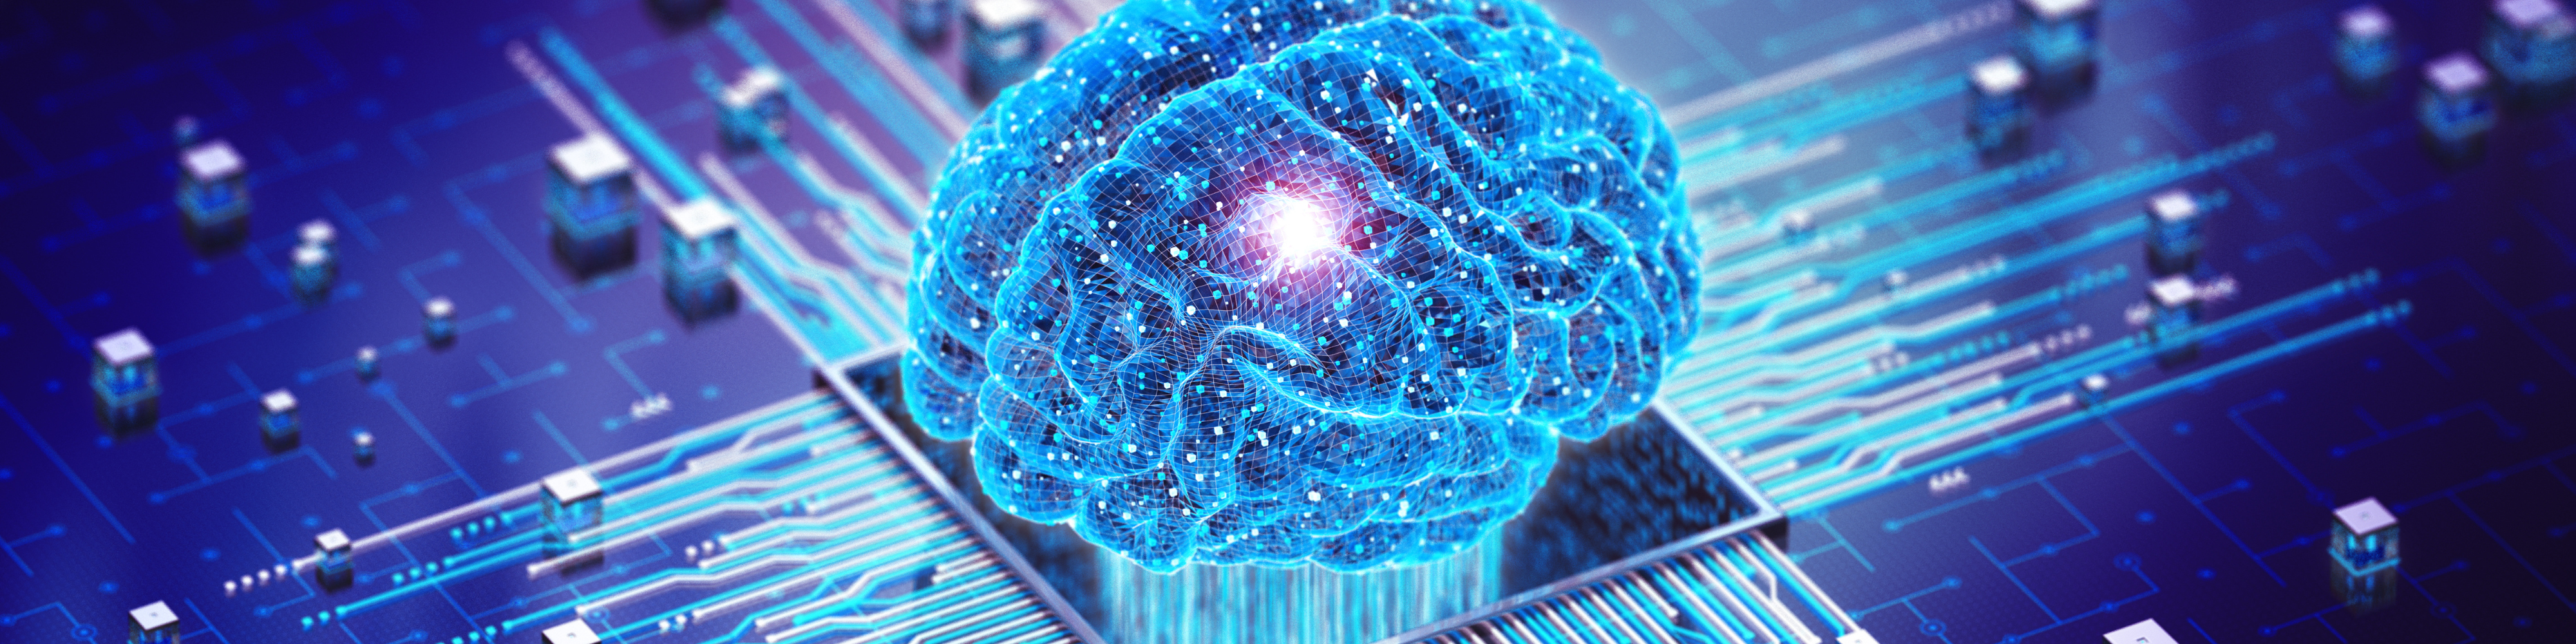 Stylized image of human brain symbolizing artificial intelligence